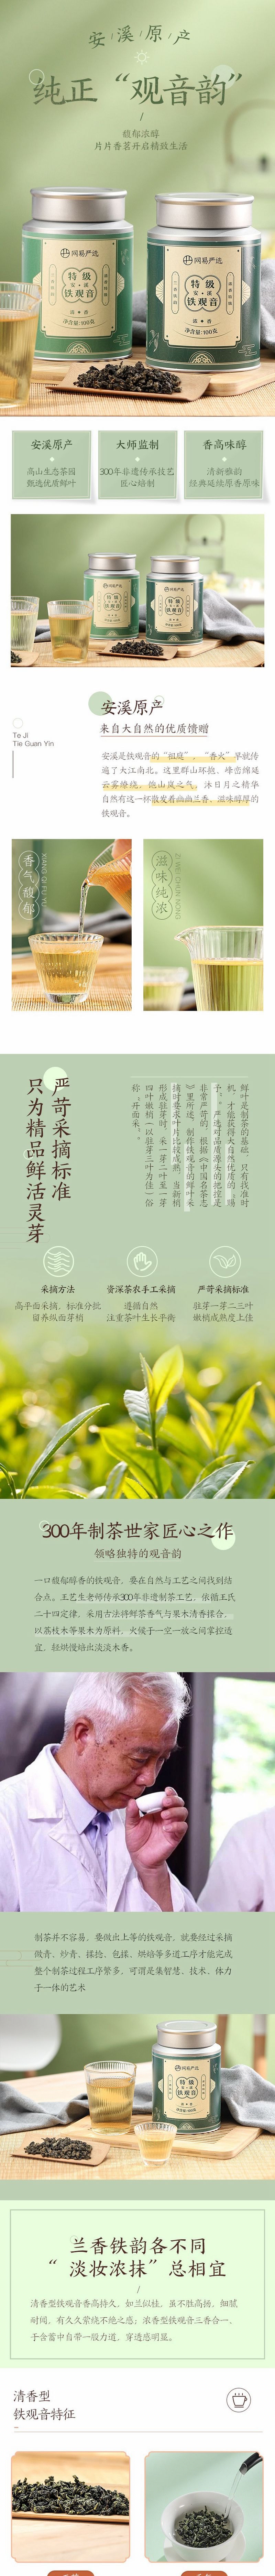 YANXUAN Anxi Tieguanyin Tea 100g - Light Flavour